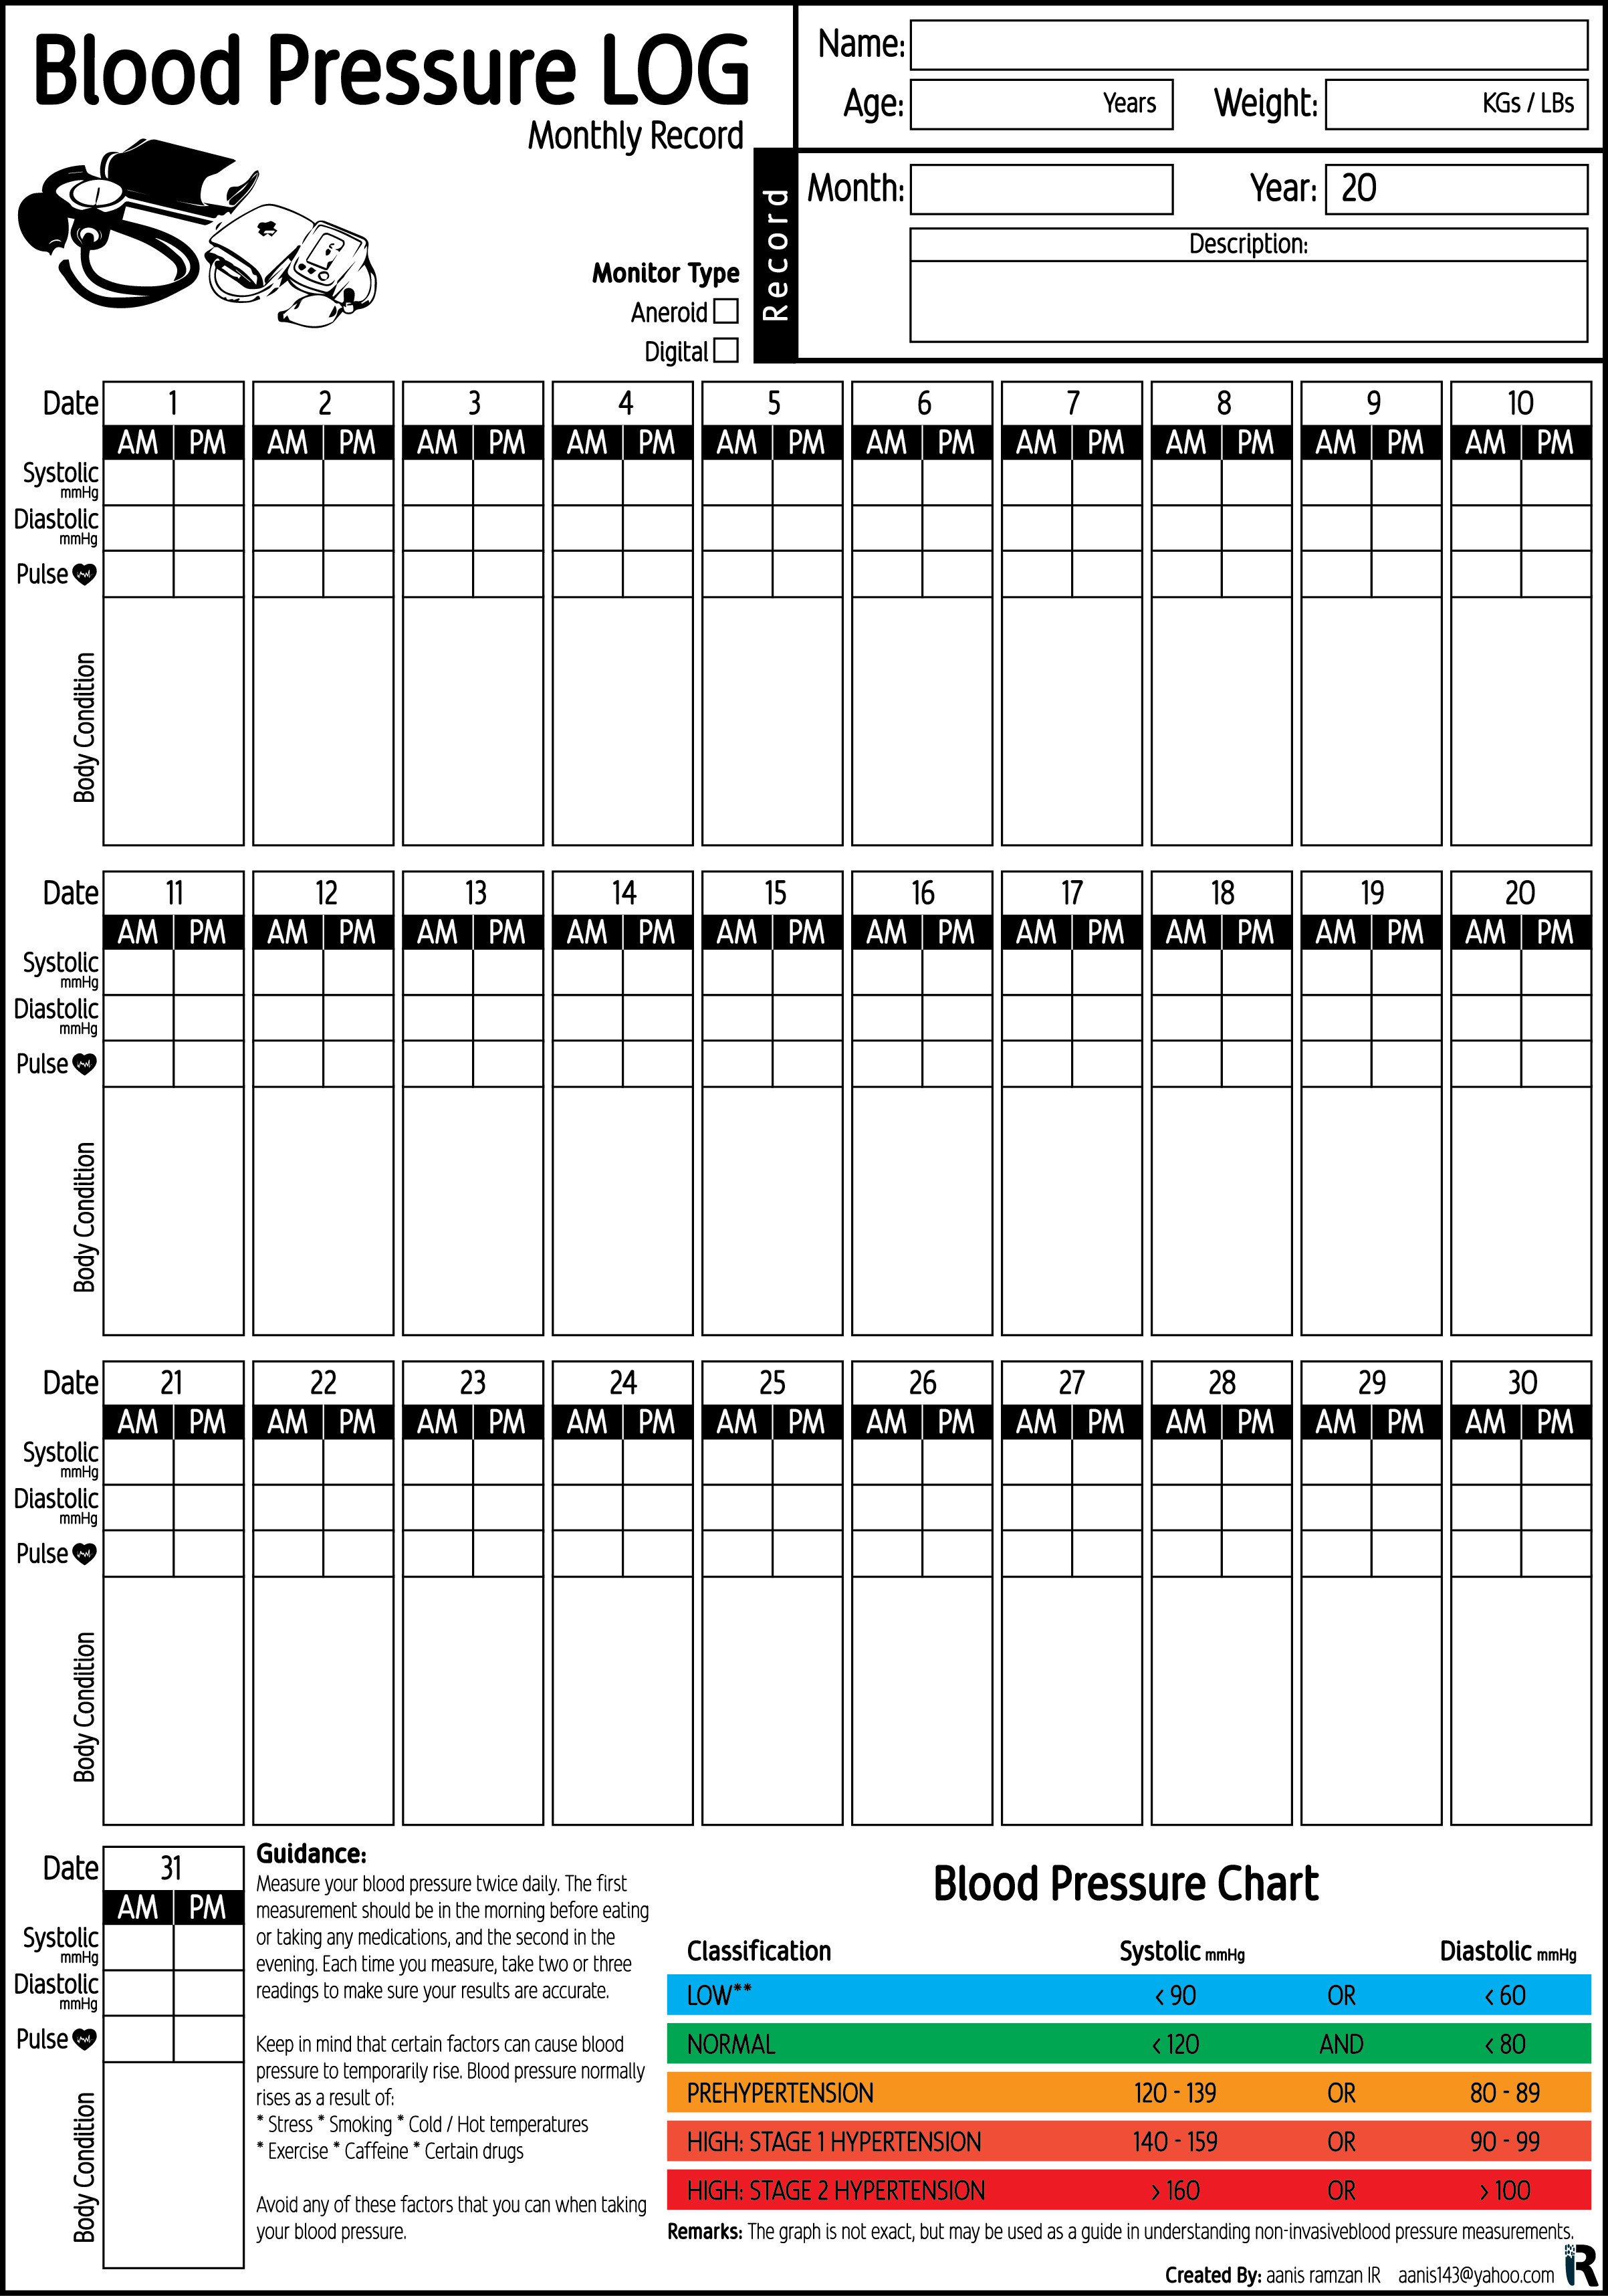 Blood Pressure Record Chart Blood Pressure Log Monthly Record Pdf Printable by Aanis